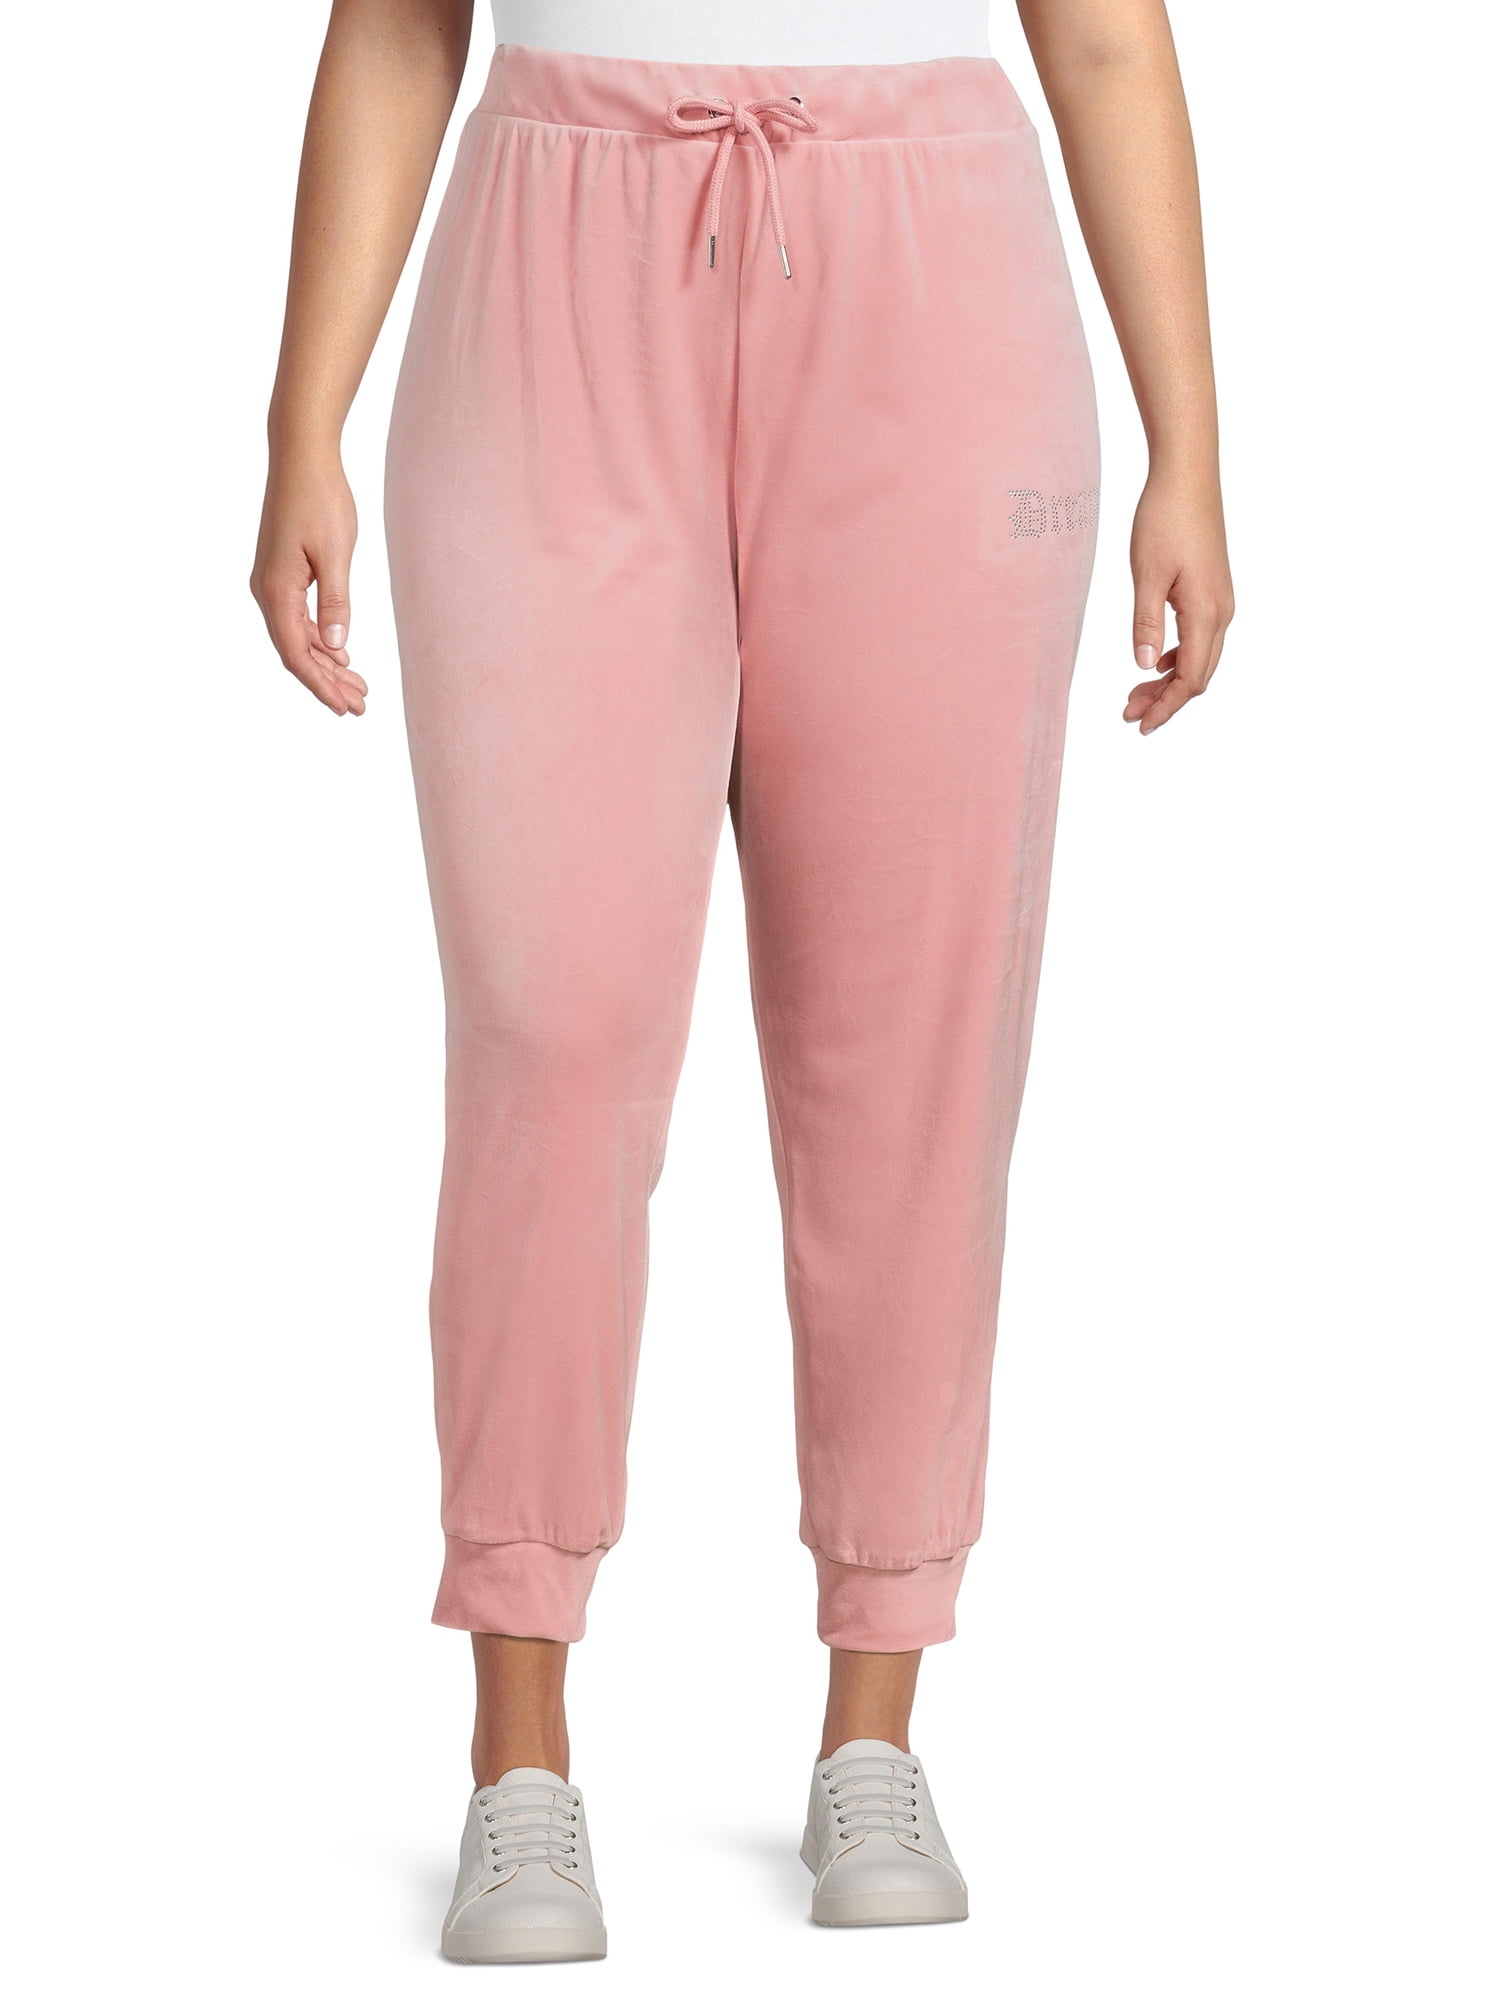 Pink Republic Juniors Printed Soft Pants White/Black Select a size